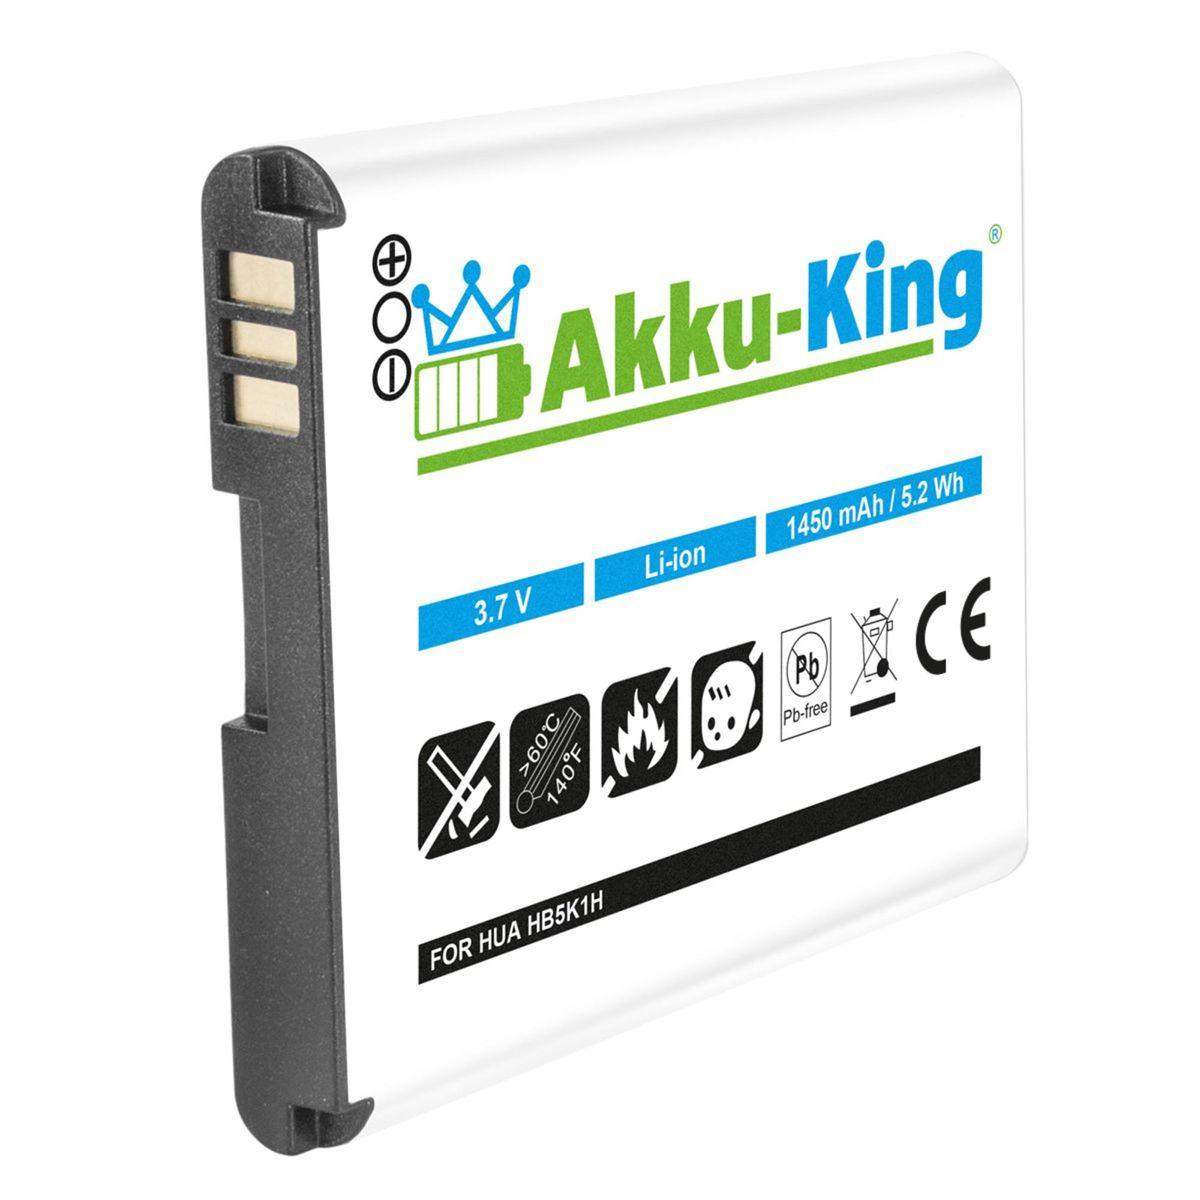 AKKU-KING kompatibel 3.7 1450mAh Li-Ion Handy-Akku, Volt, mit Akku HB5K1H Huawei